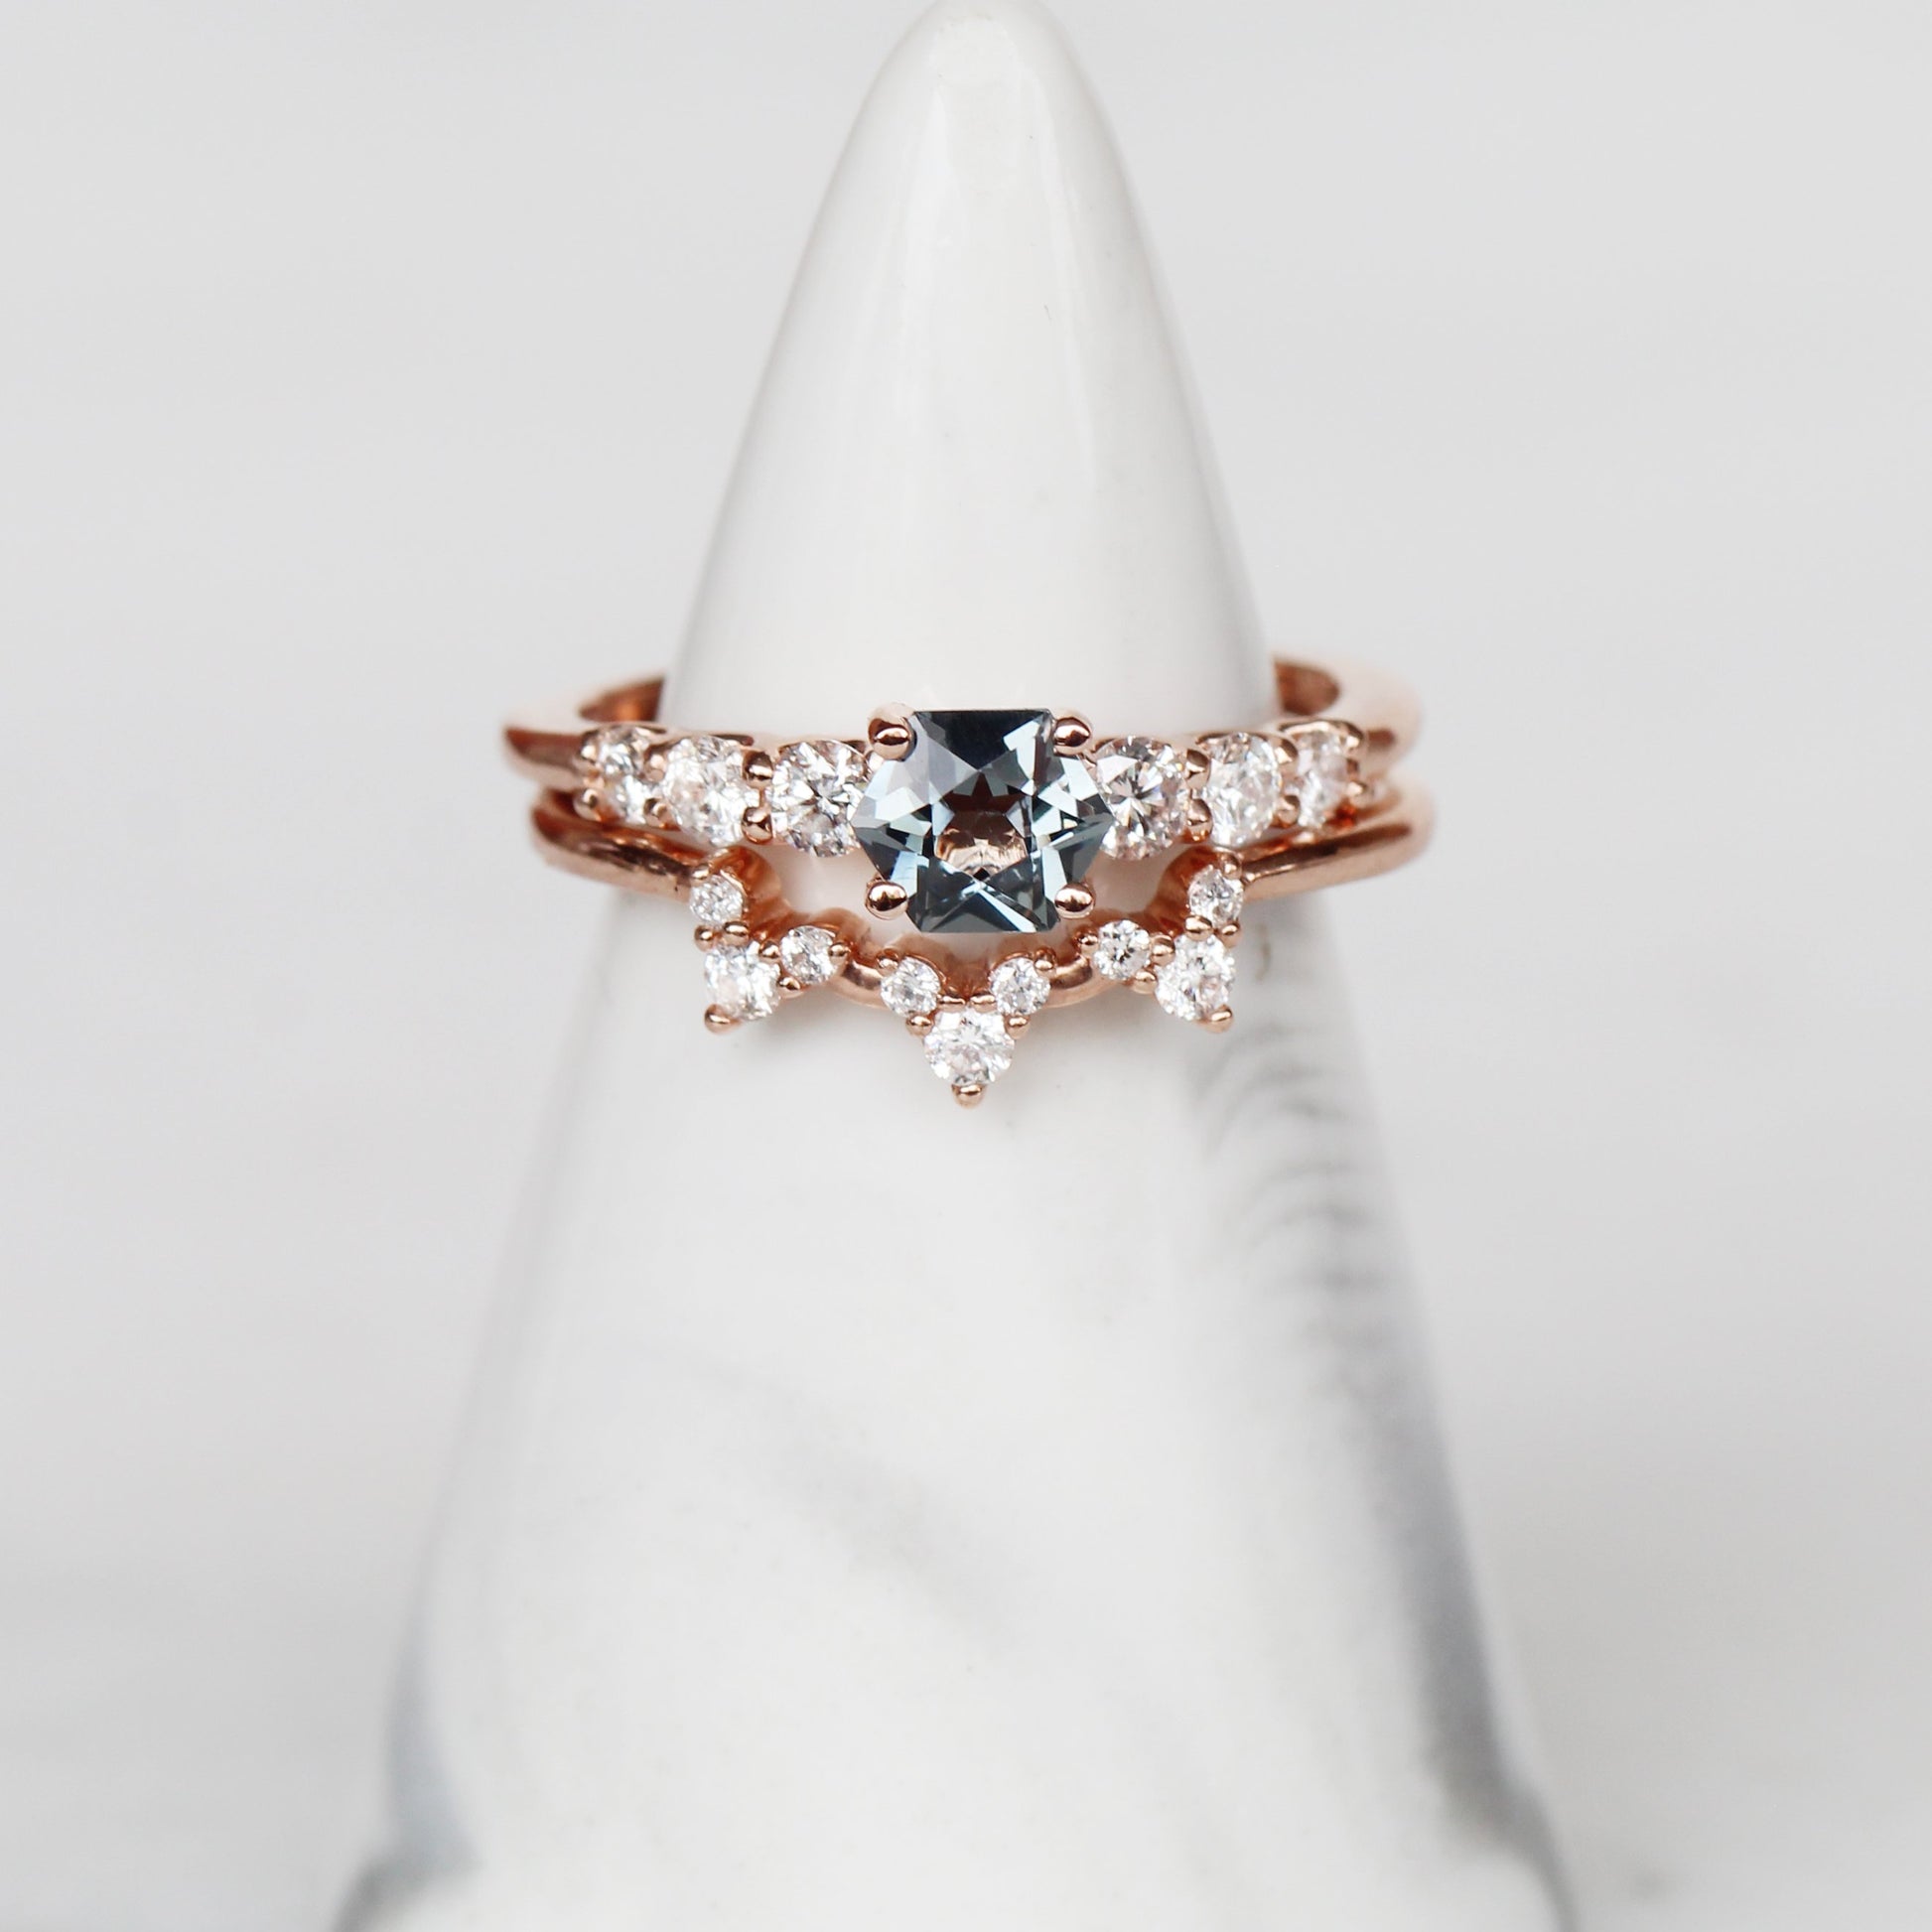 Nina Setting - Midwinter Co. Alternative Bridal Rings and Modern Fine Jewelry